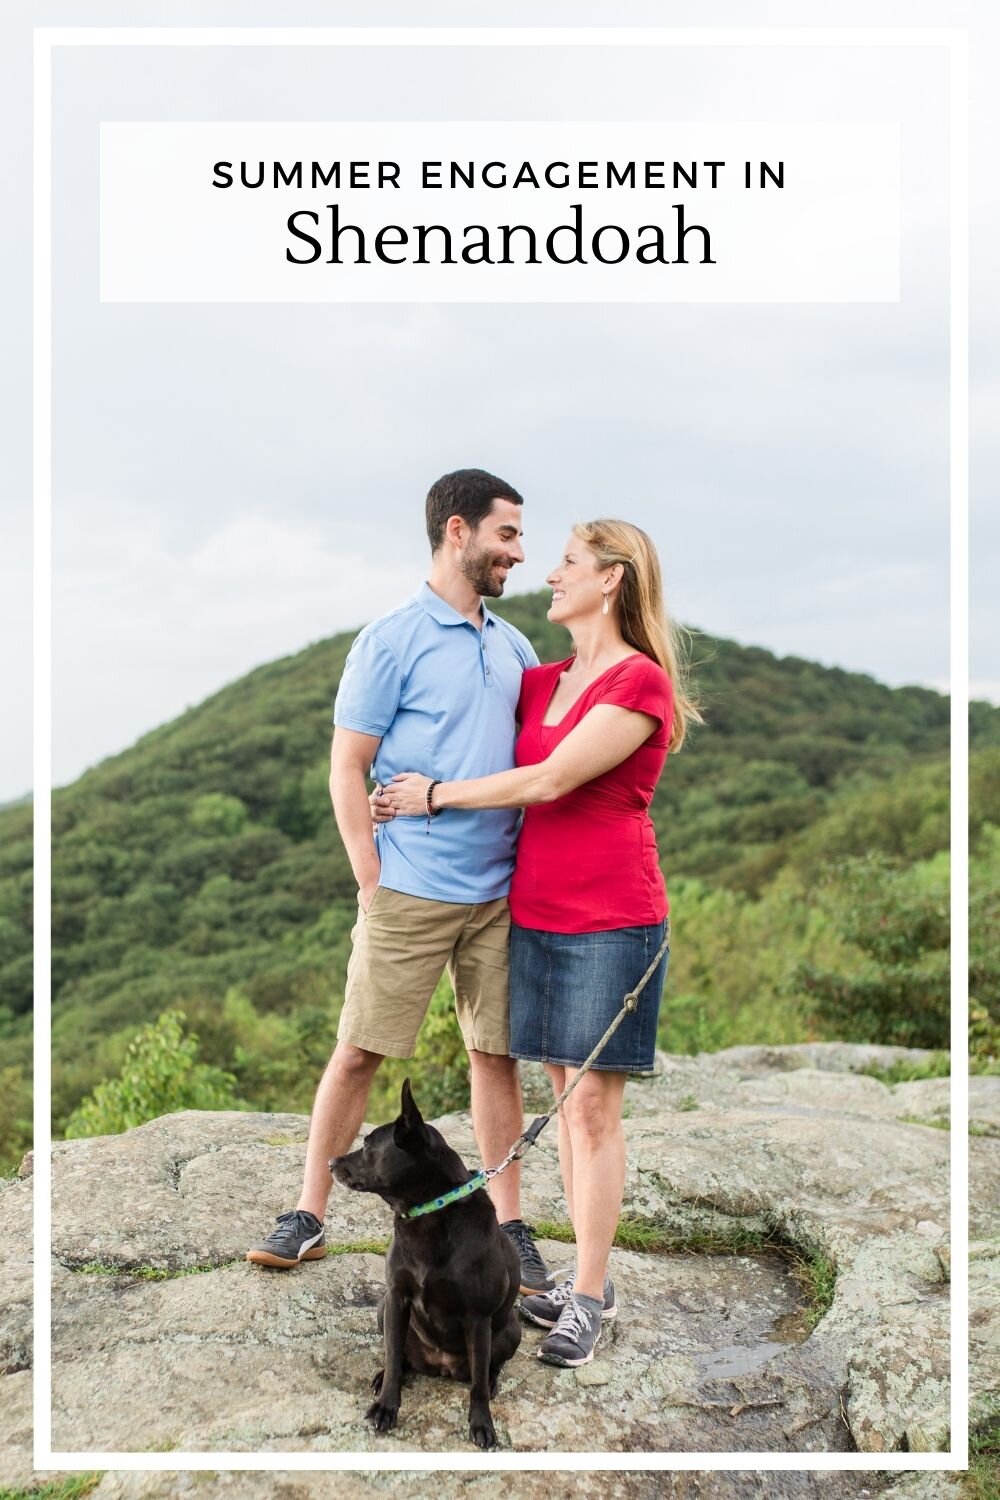 Engagement photos in Shenandoah